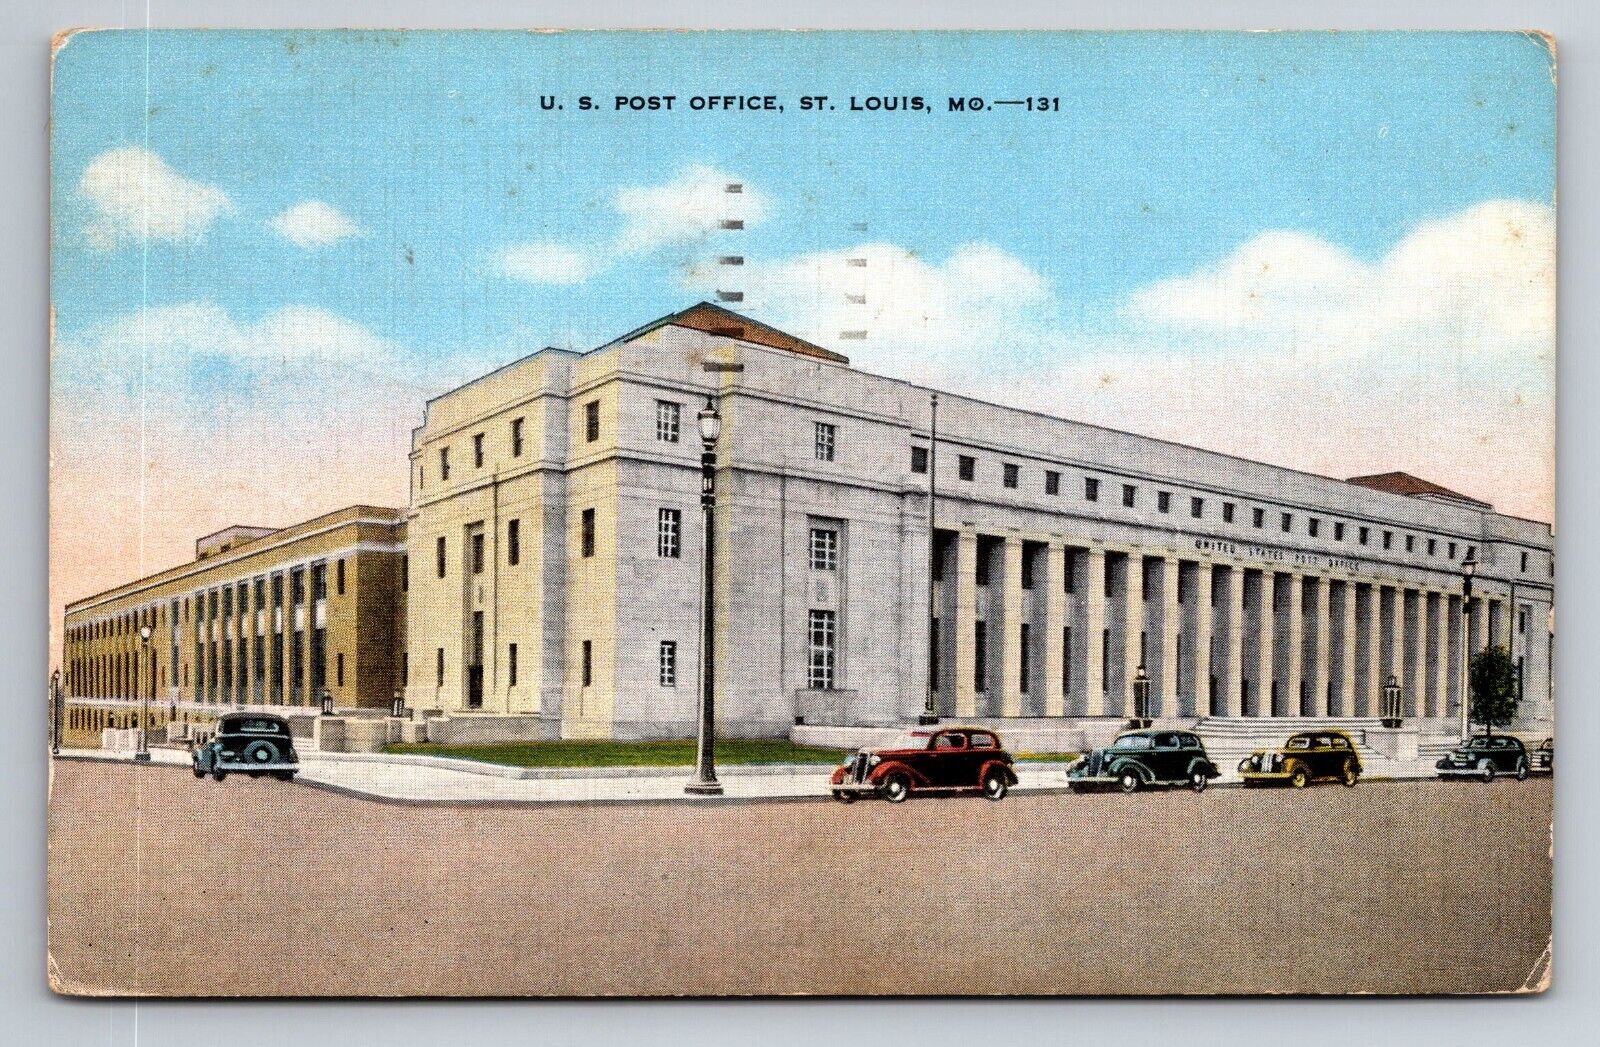 U.S. Post Office St. Louis Missouri Vintage Posted 1945 Linen Postcard